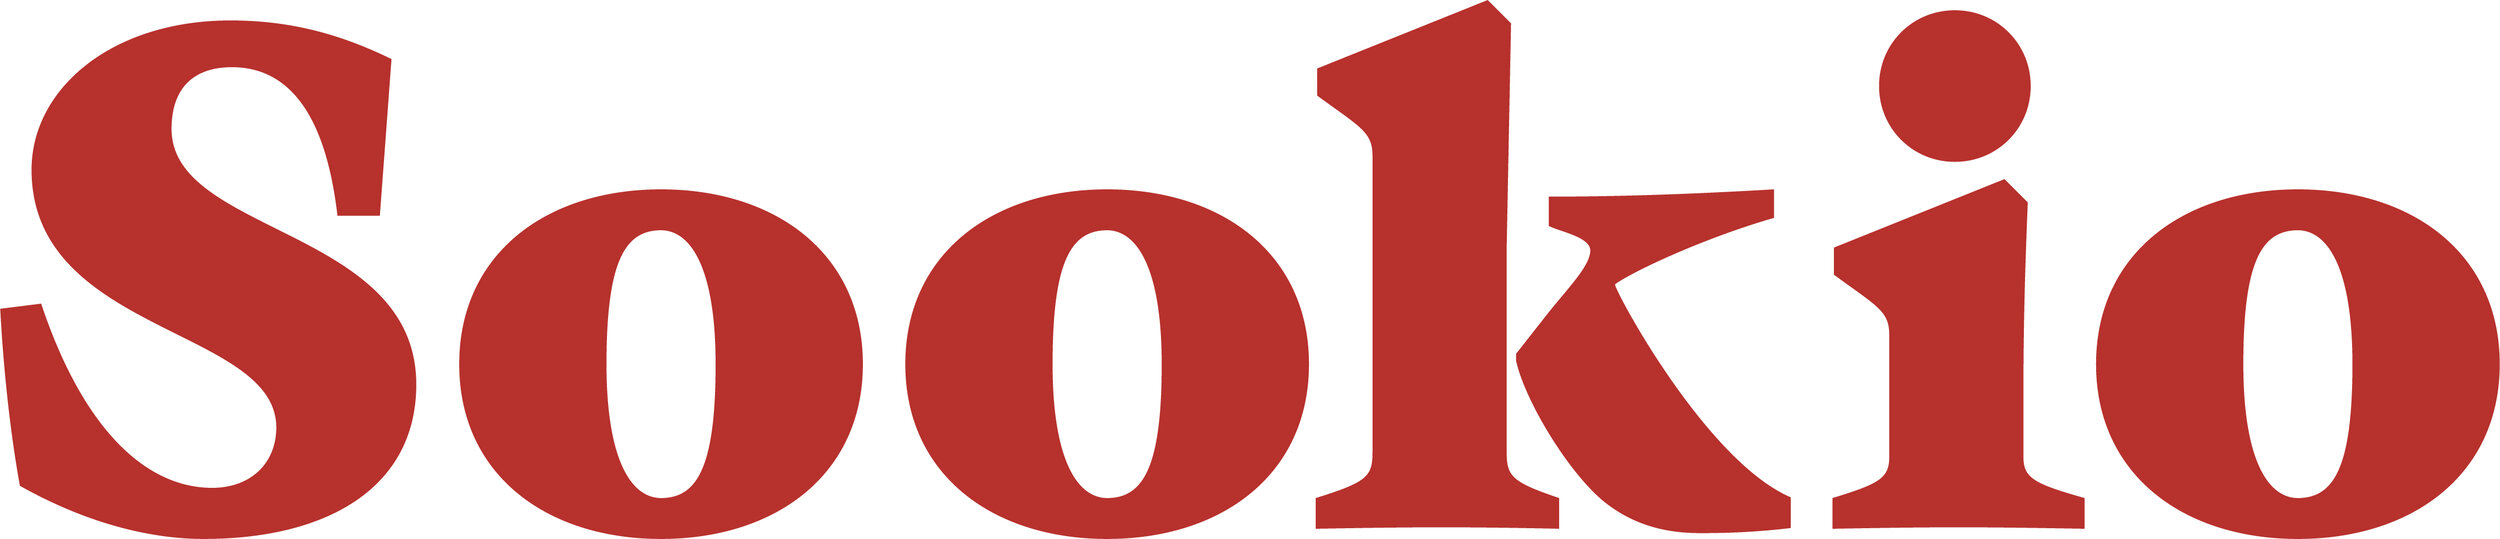 Sookio logo for web